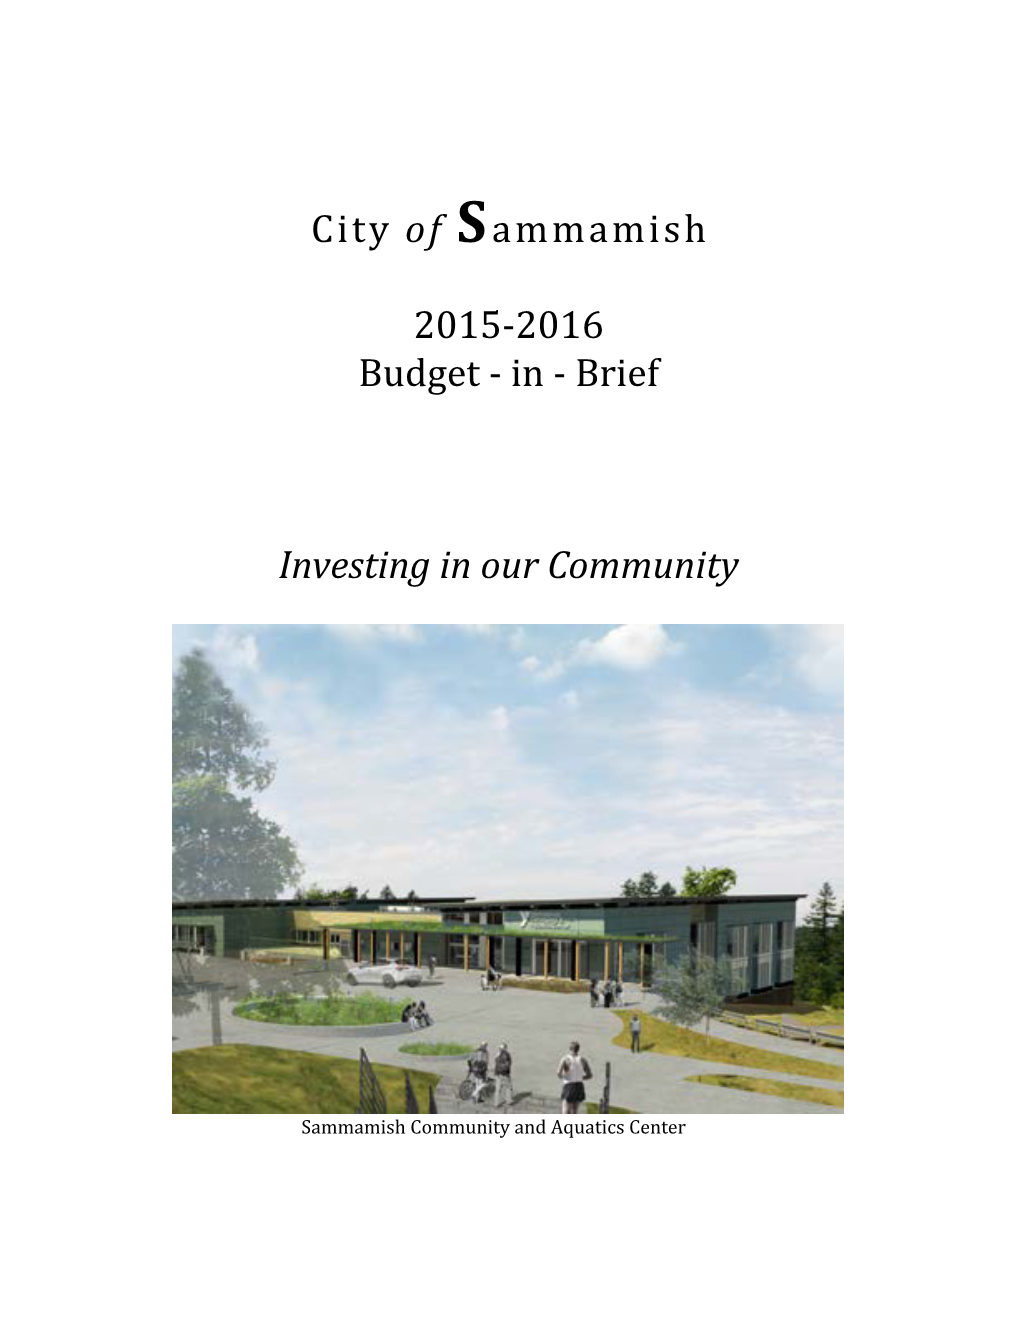 City of Sammamish 2015-2016 Budget